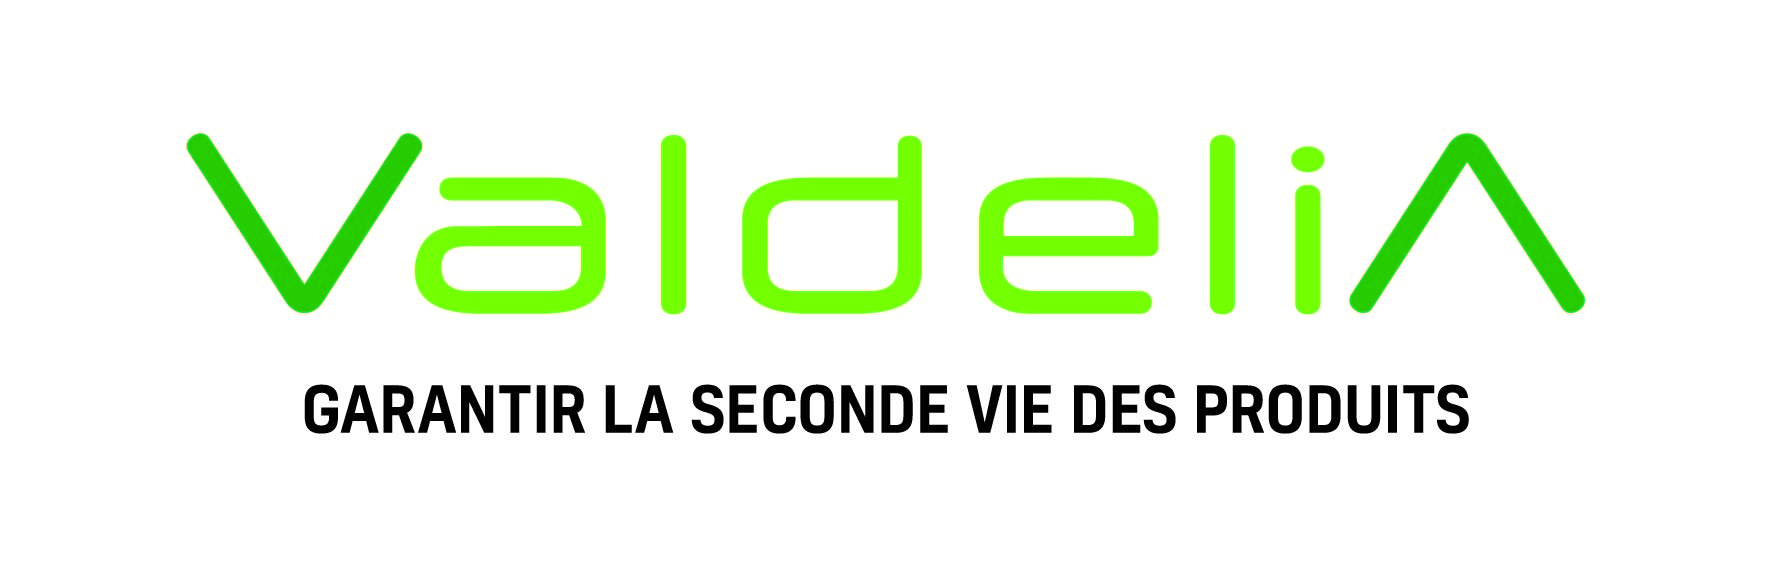 Valdelia_logo-fond-blanc.jpg